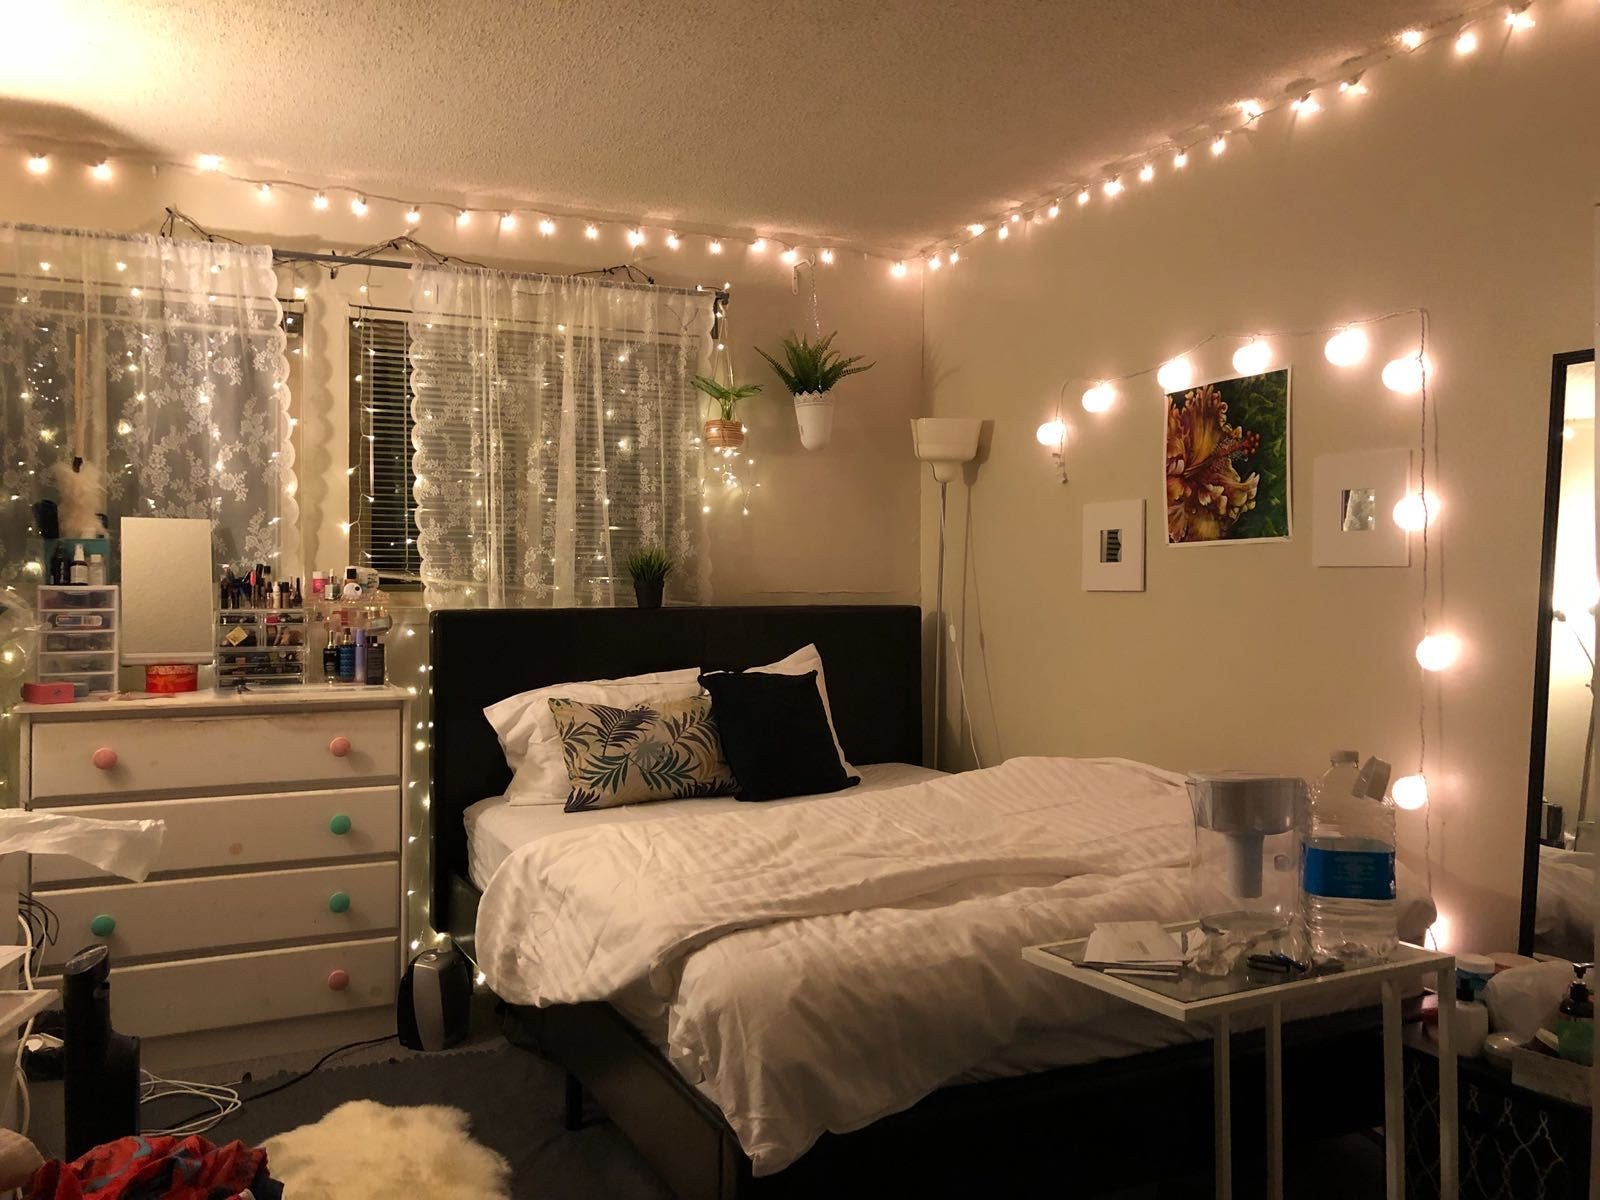 Teen Girl Bedroom Decor Luxury Cute Room Light Cute Roomdecor Room Teengirl